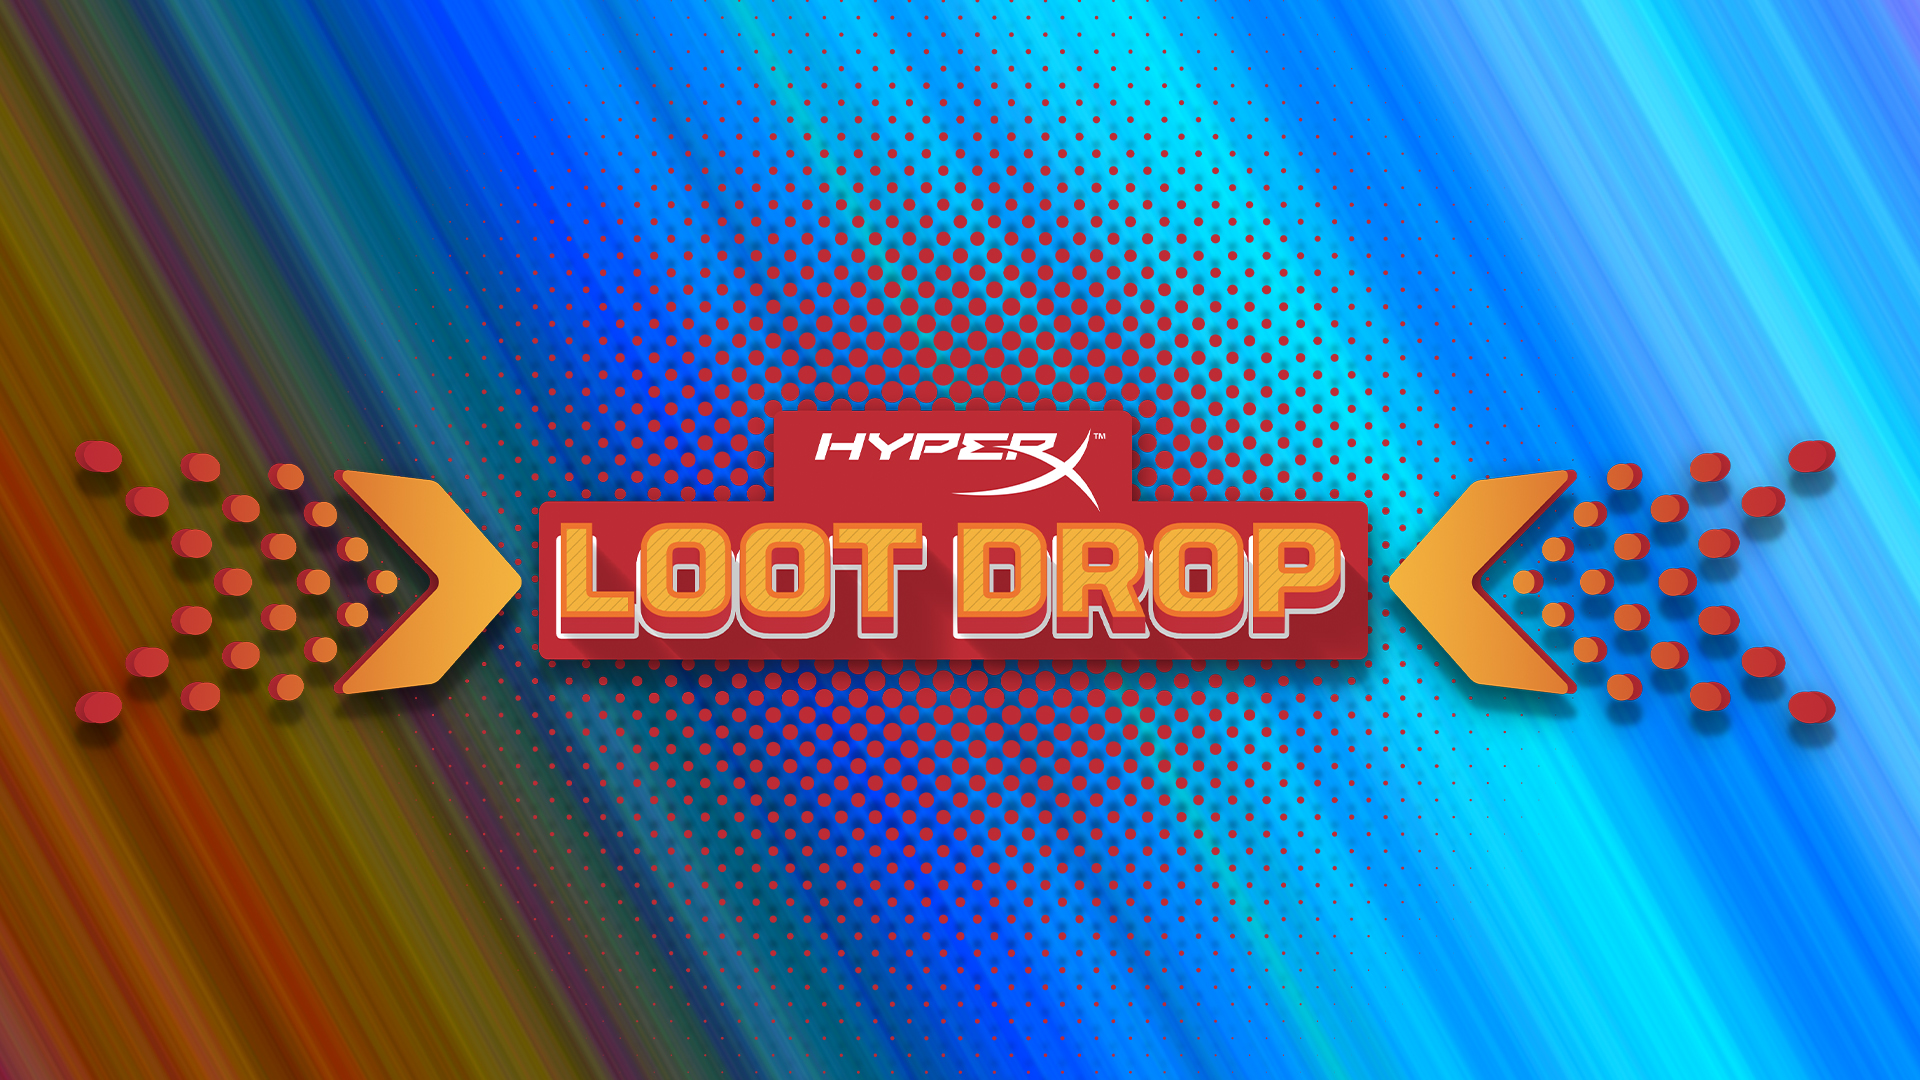 Hyper X Loot Drop II : Find The Best Gaming Accessories